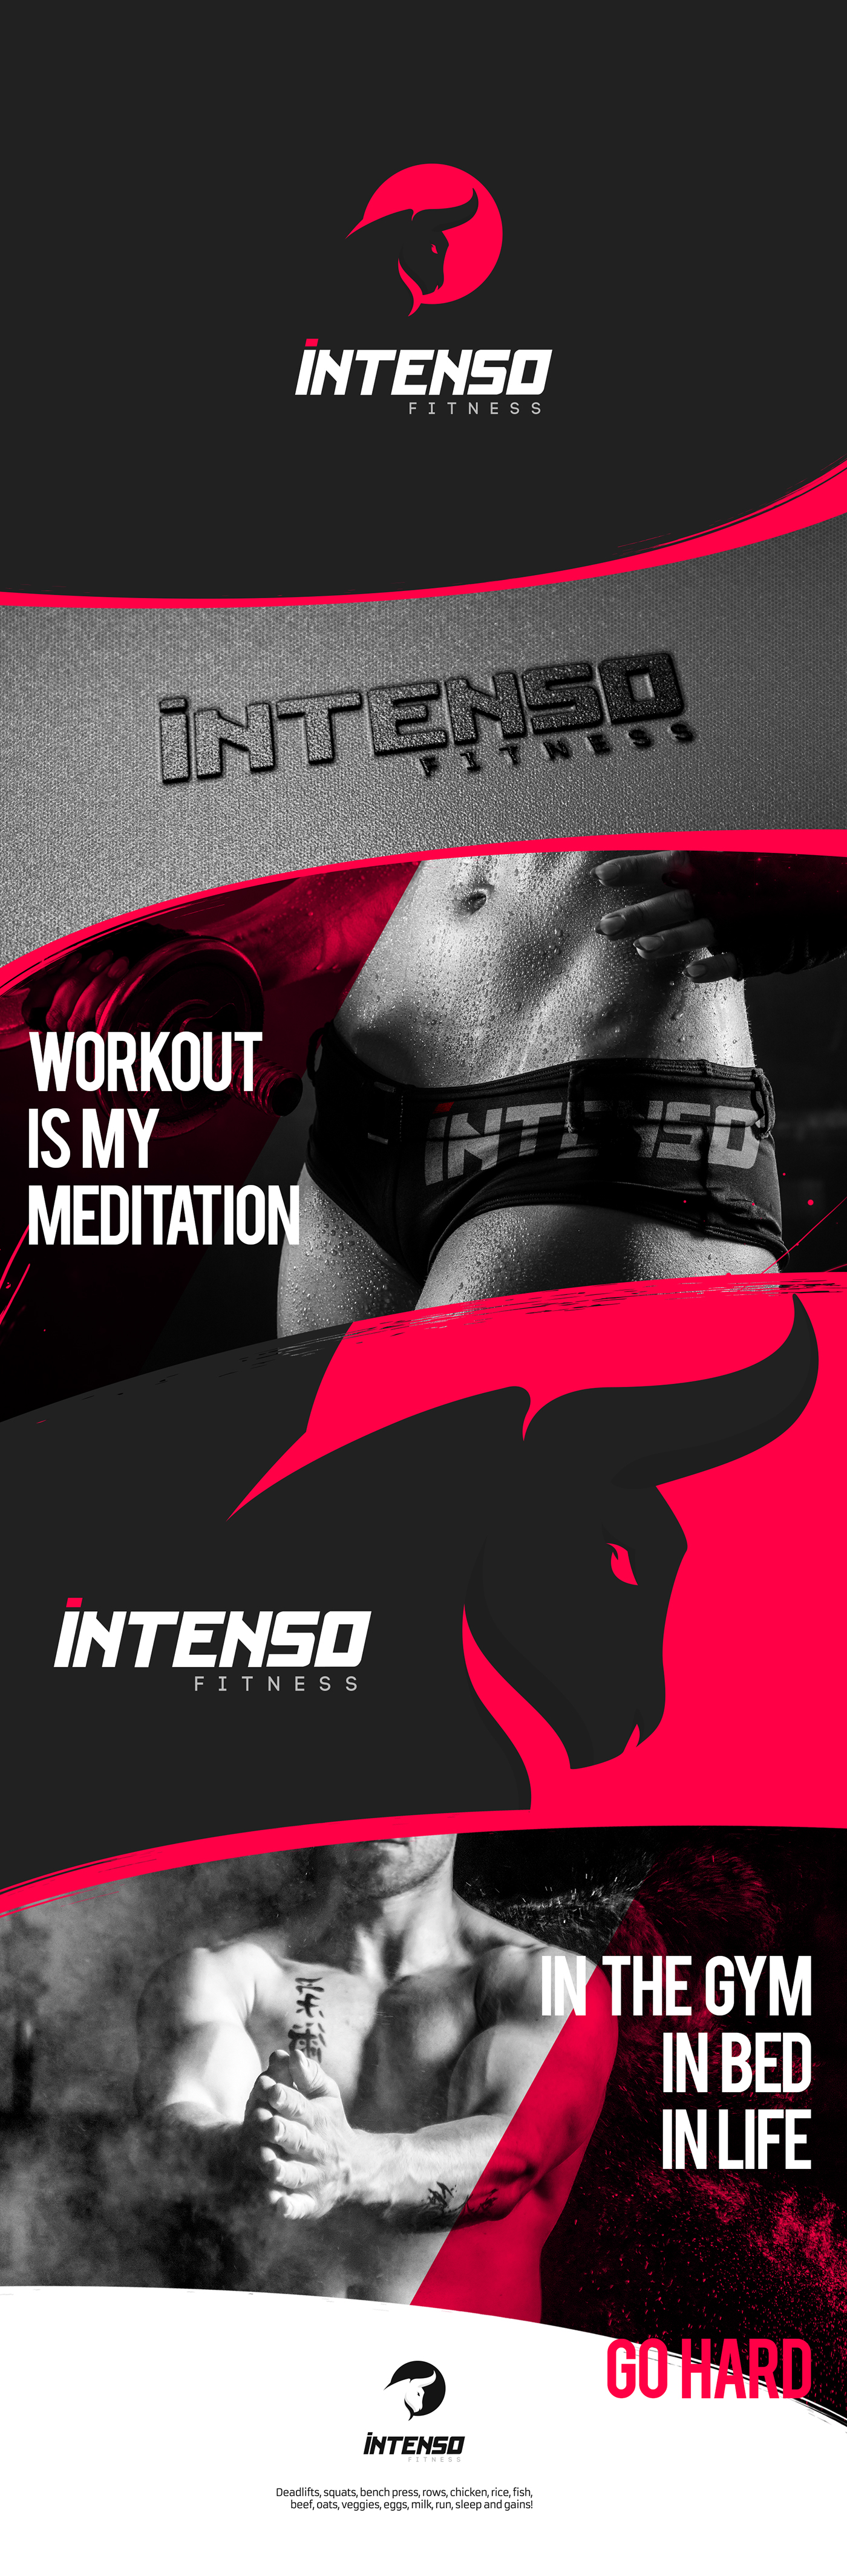 intenso fitness cajva   cajveanean alexandru timisoara romania design arts bull logo gym workout red black motivational